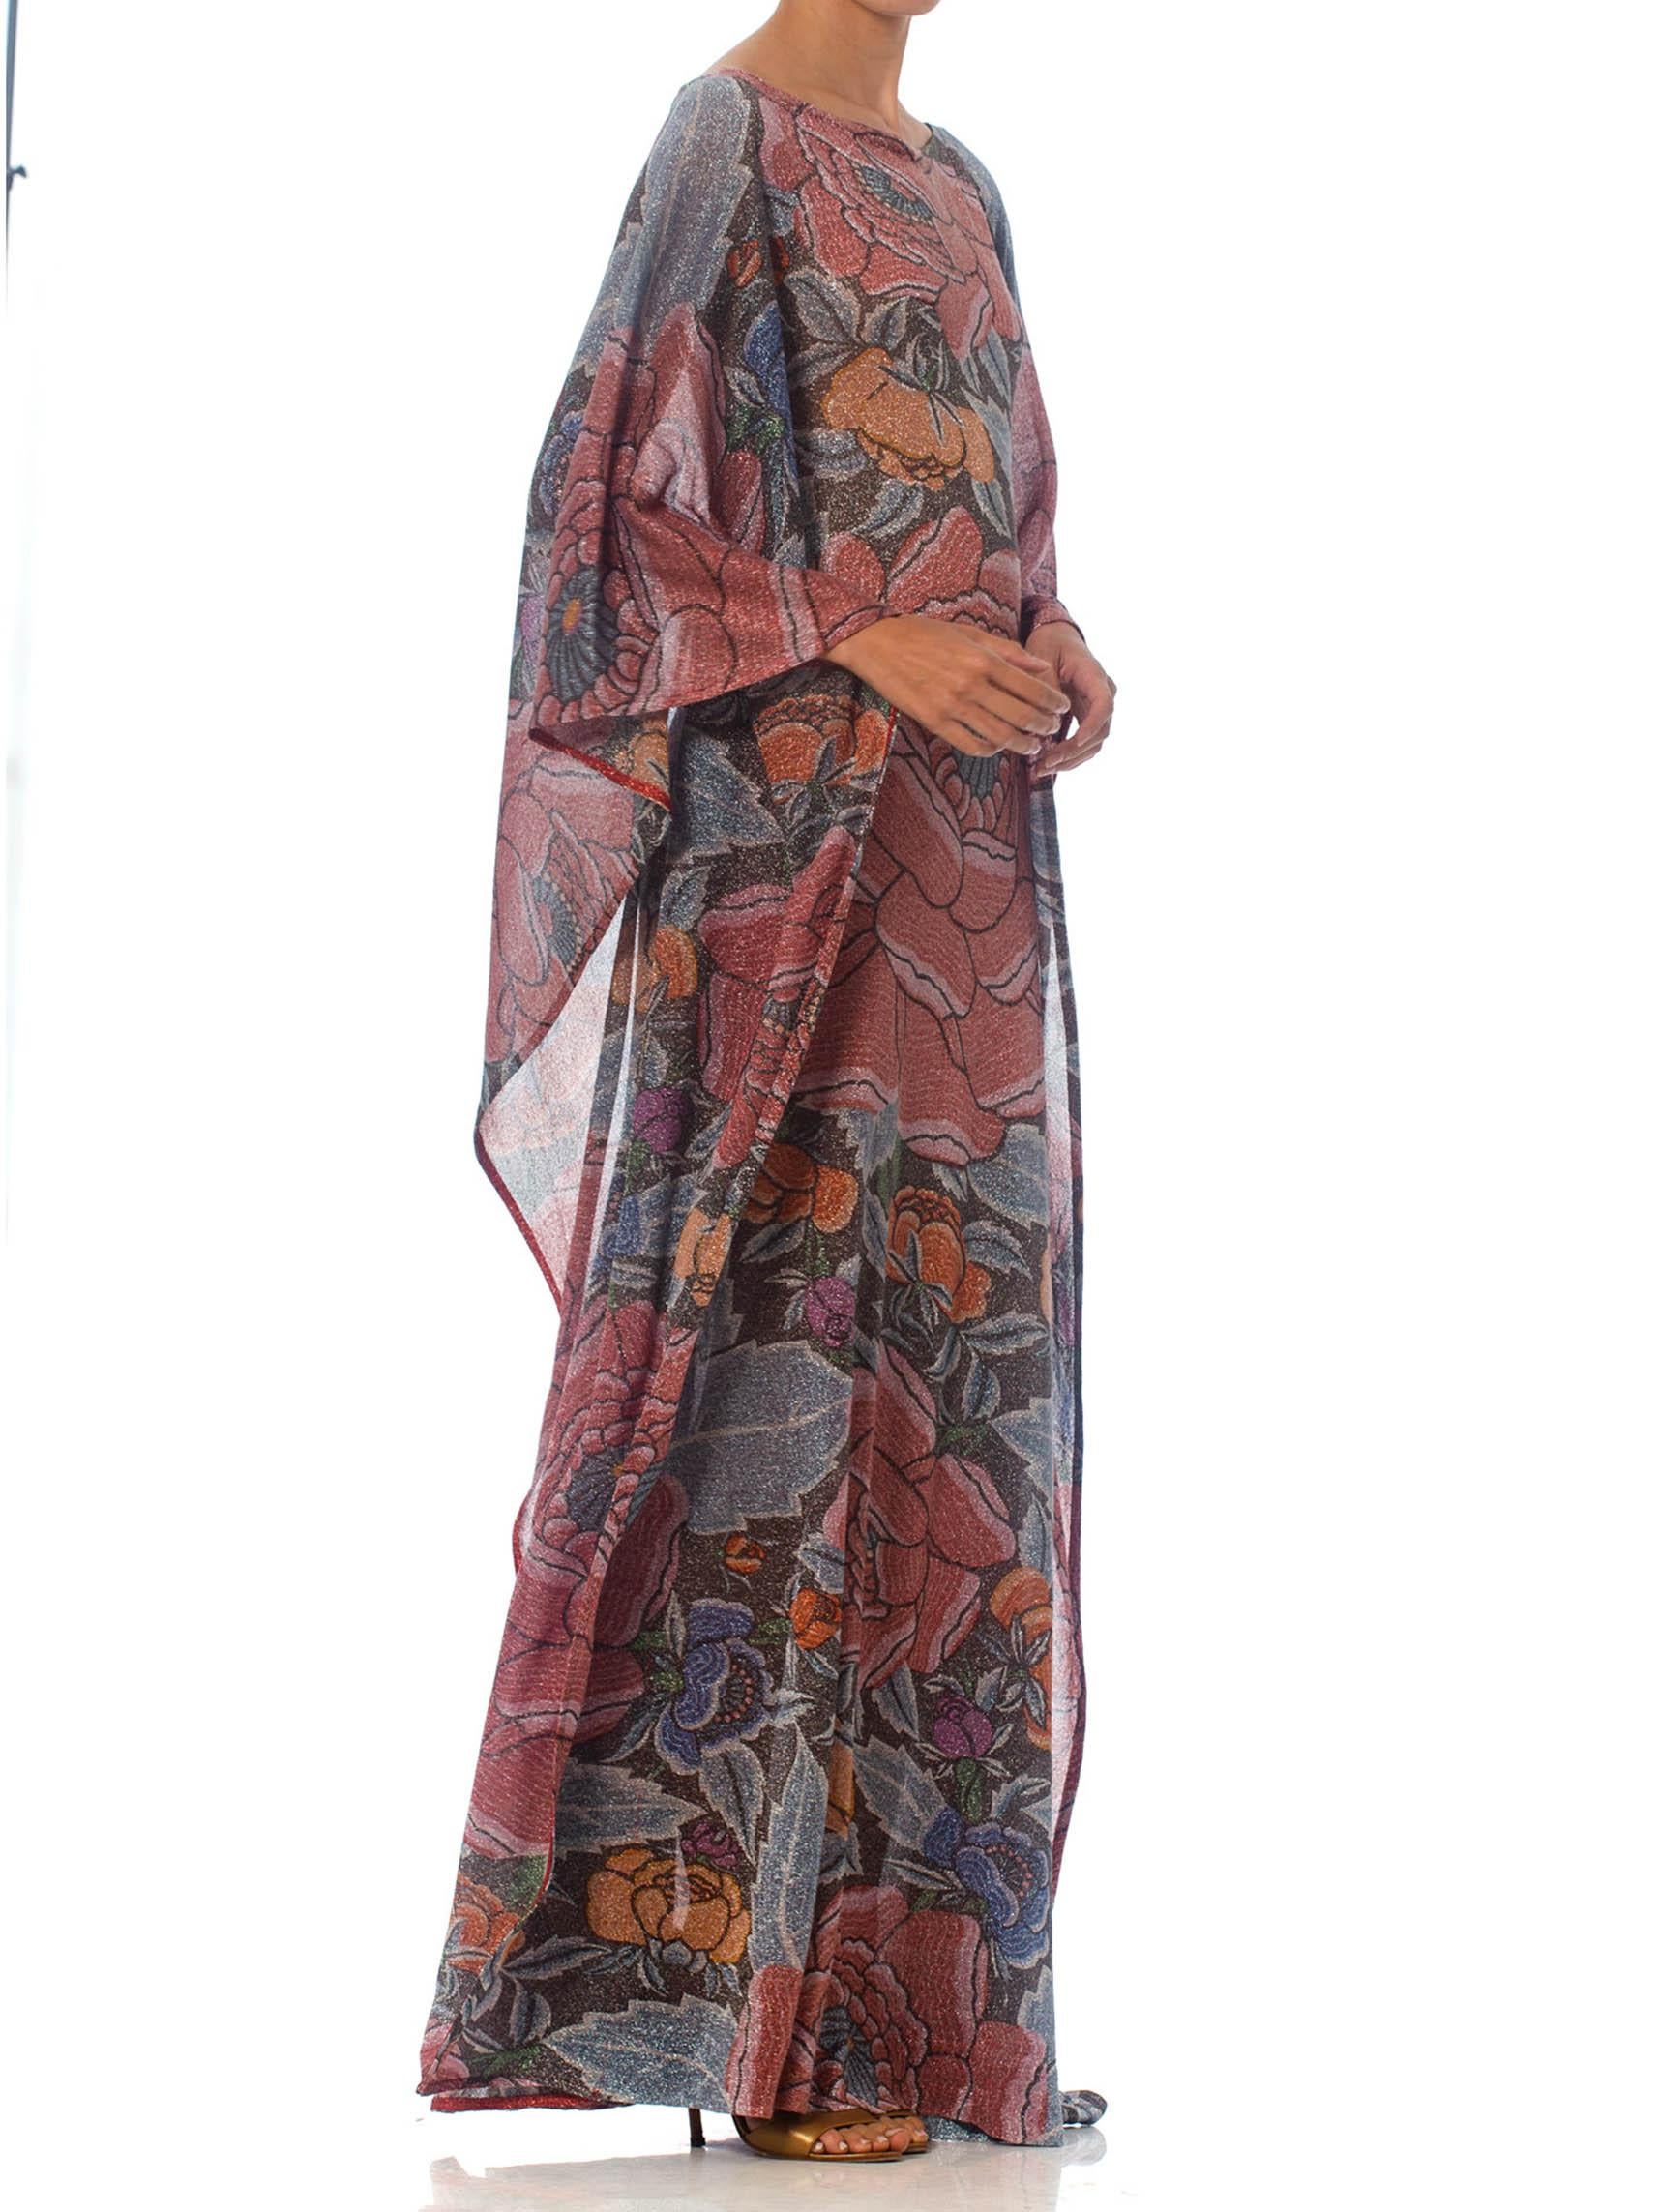 Women's 1970S MISSONI Metallic Rayon Blend Knit Rare & Collectible Asian Floral Kaftan For Sale